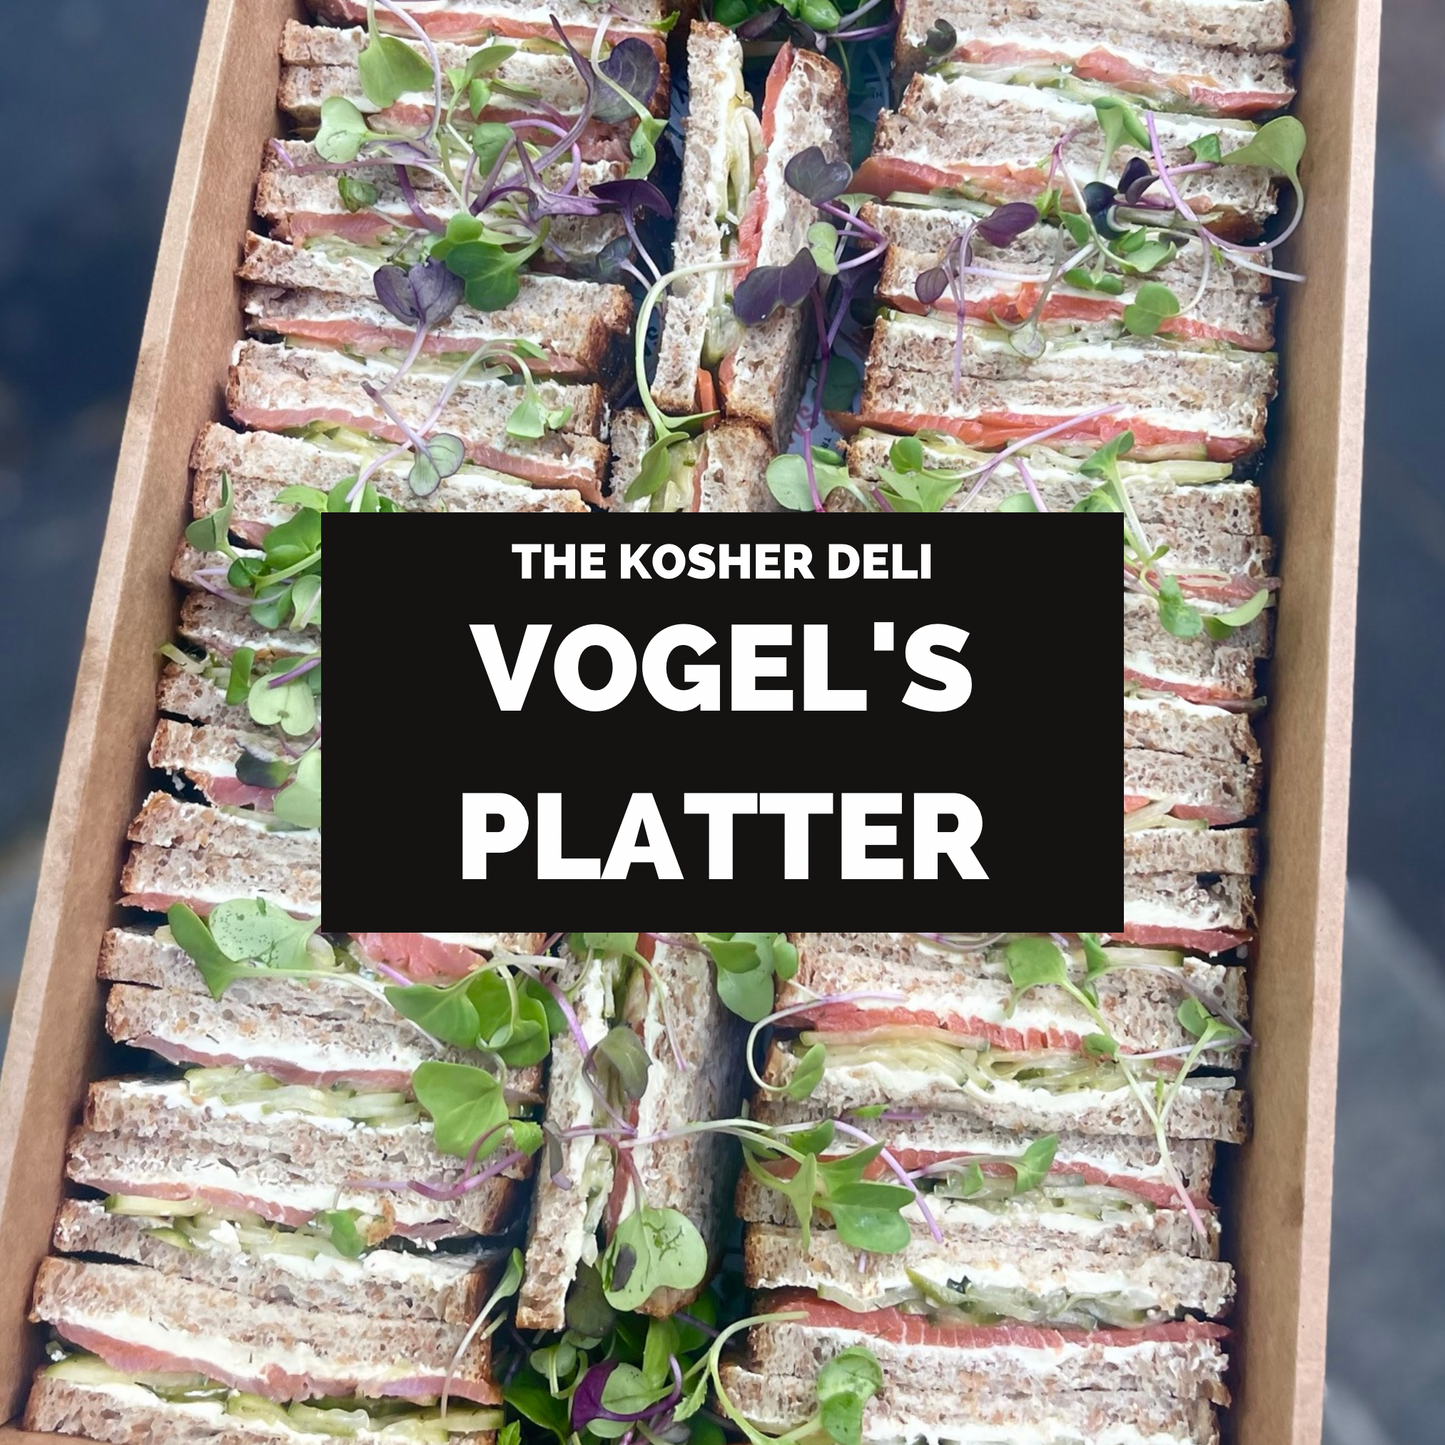 Vogel's sandwich platter - serves 8-10 people